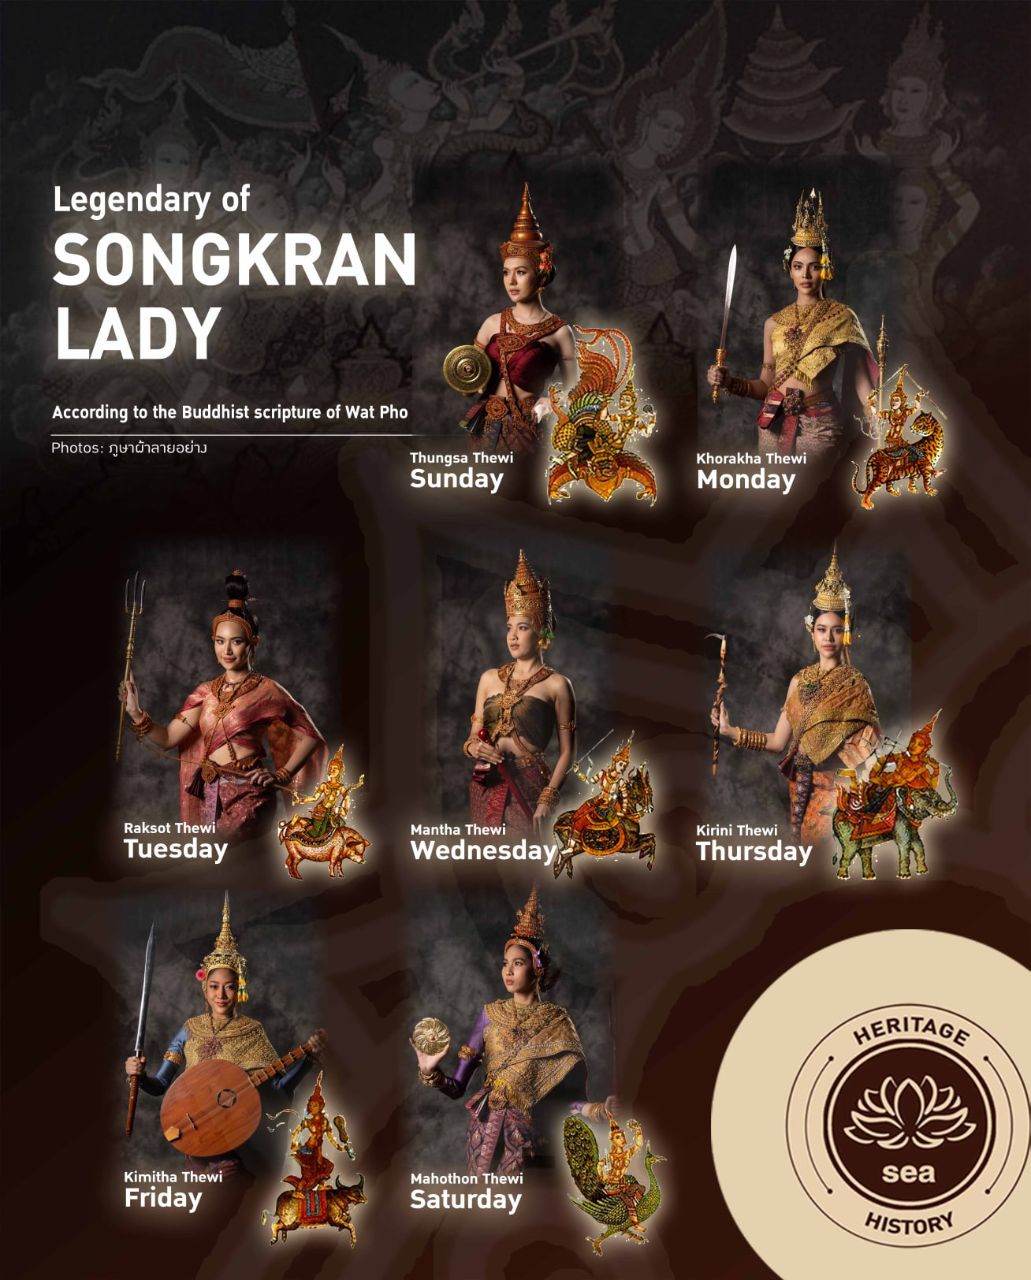 Songkran Lady (Nang Songkran)